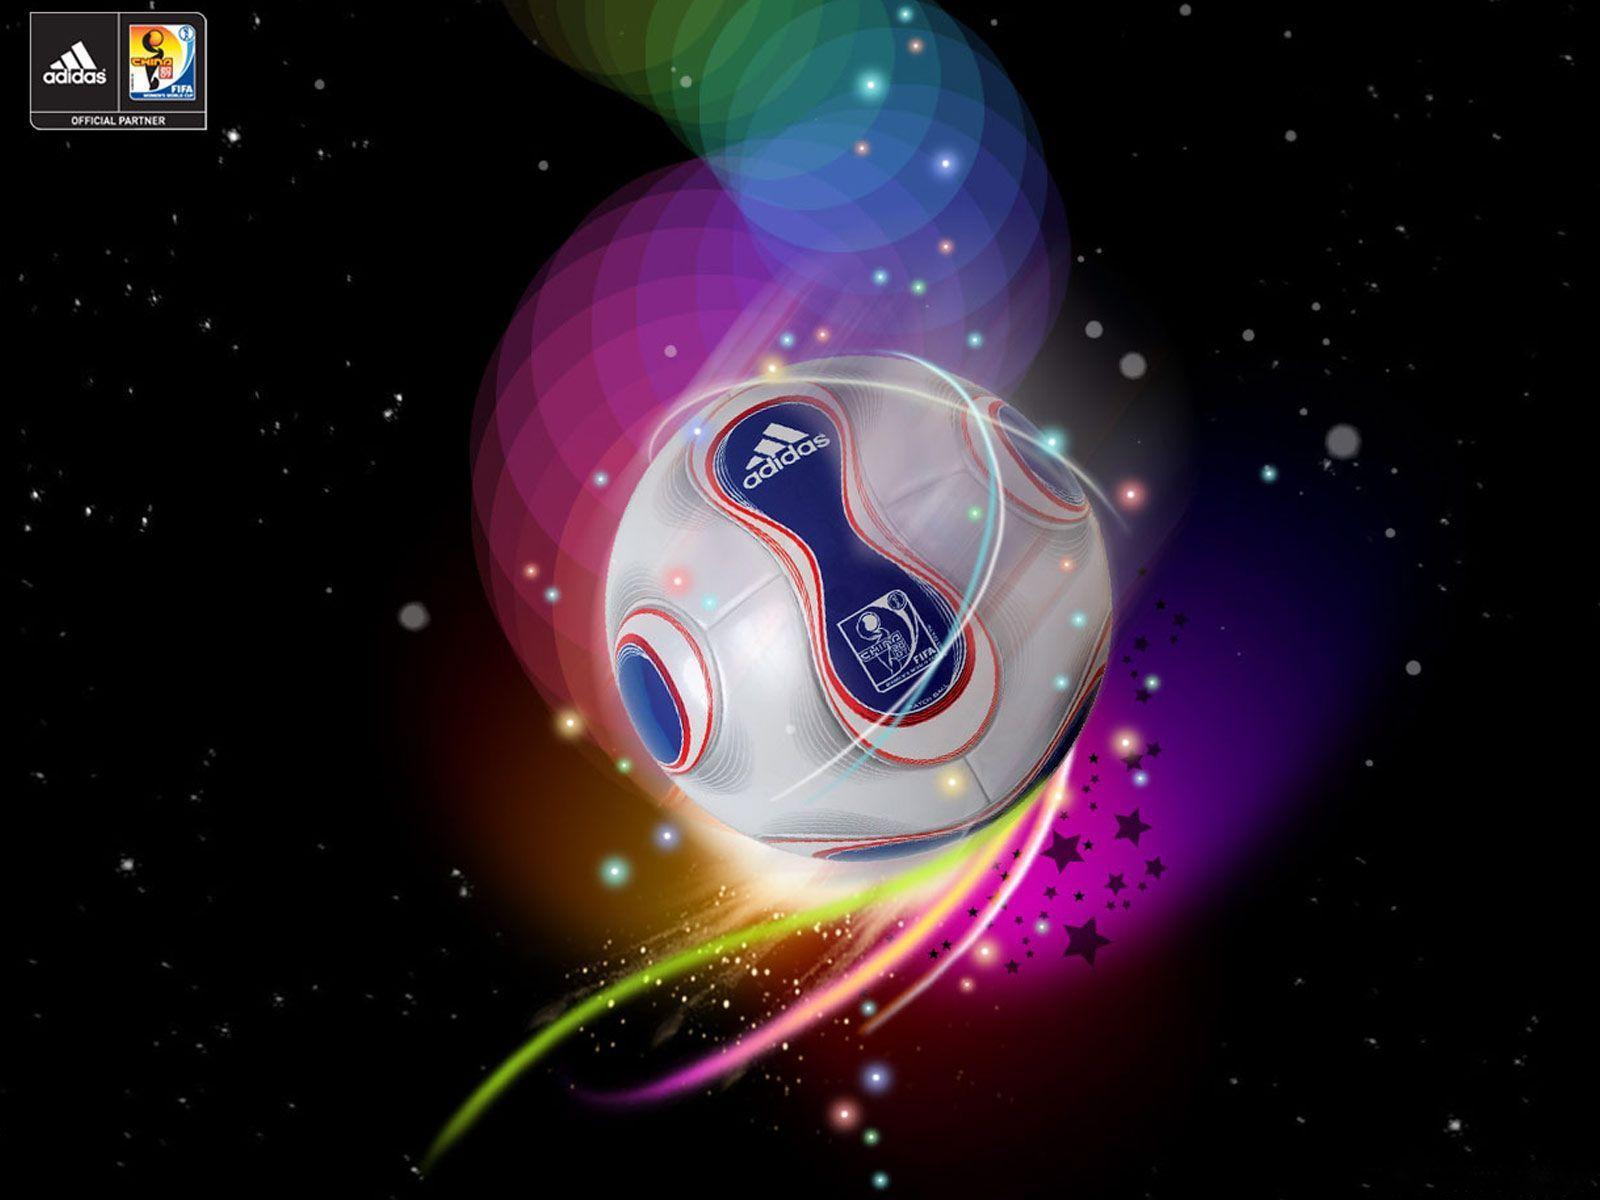 Cool Soccer Ball 462 HD Wallpaper. Areahd